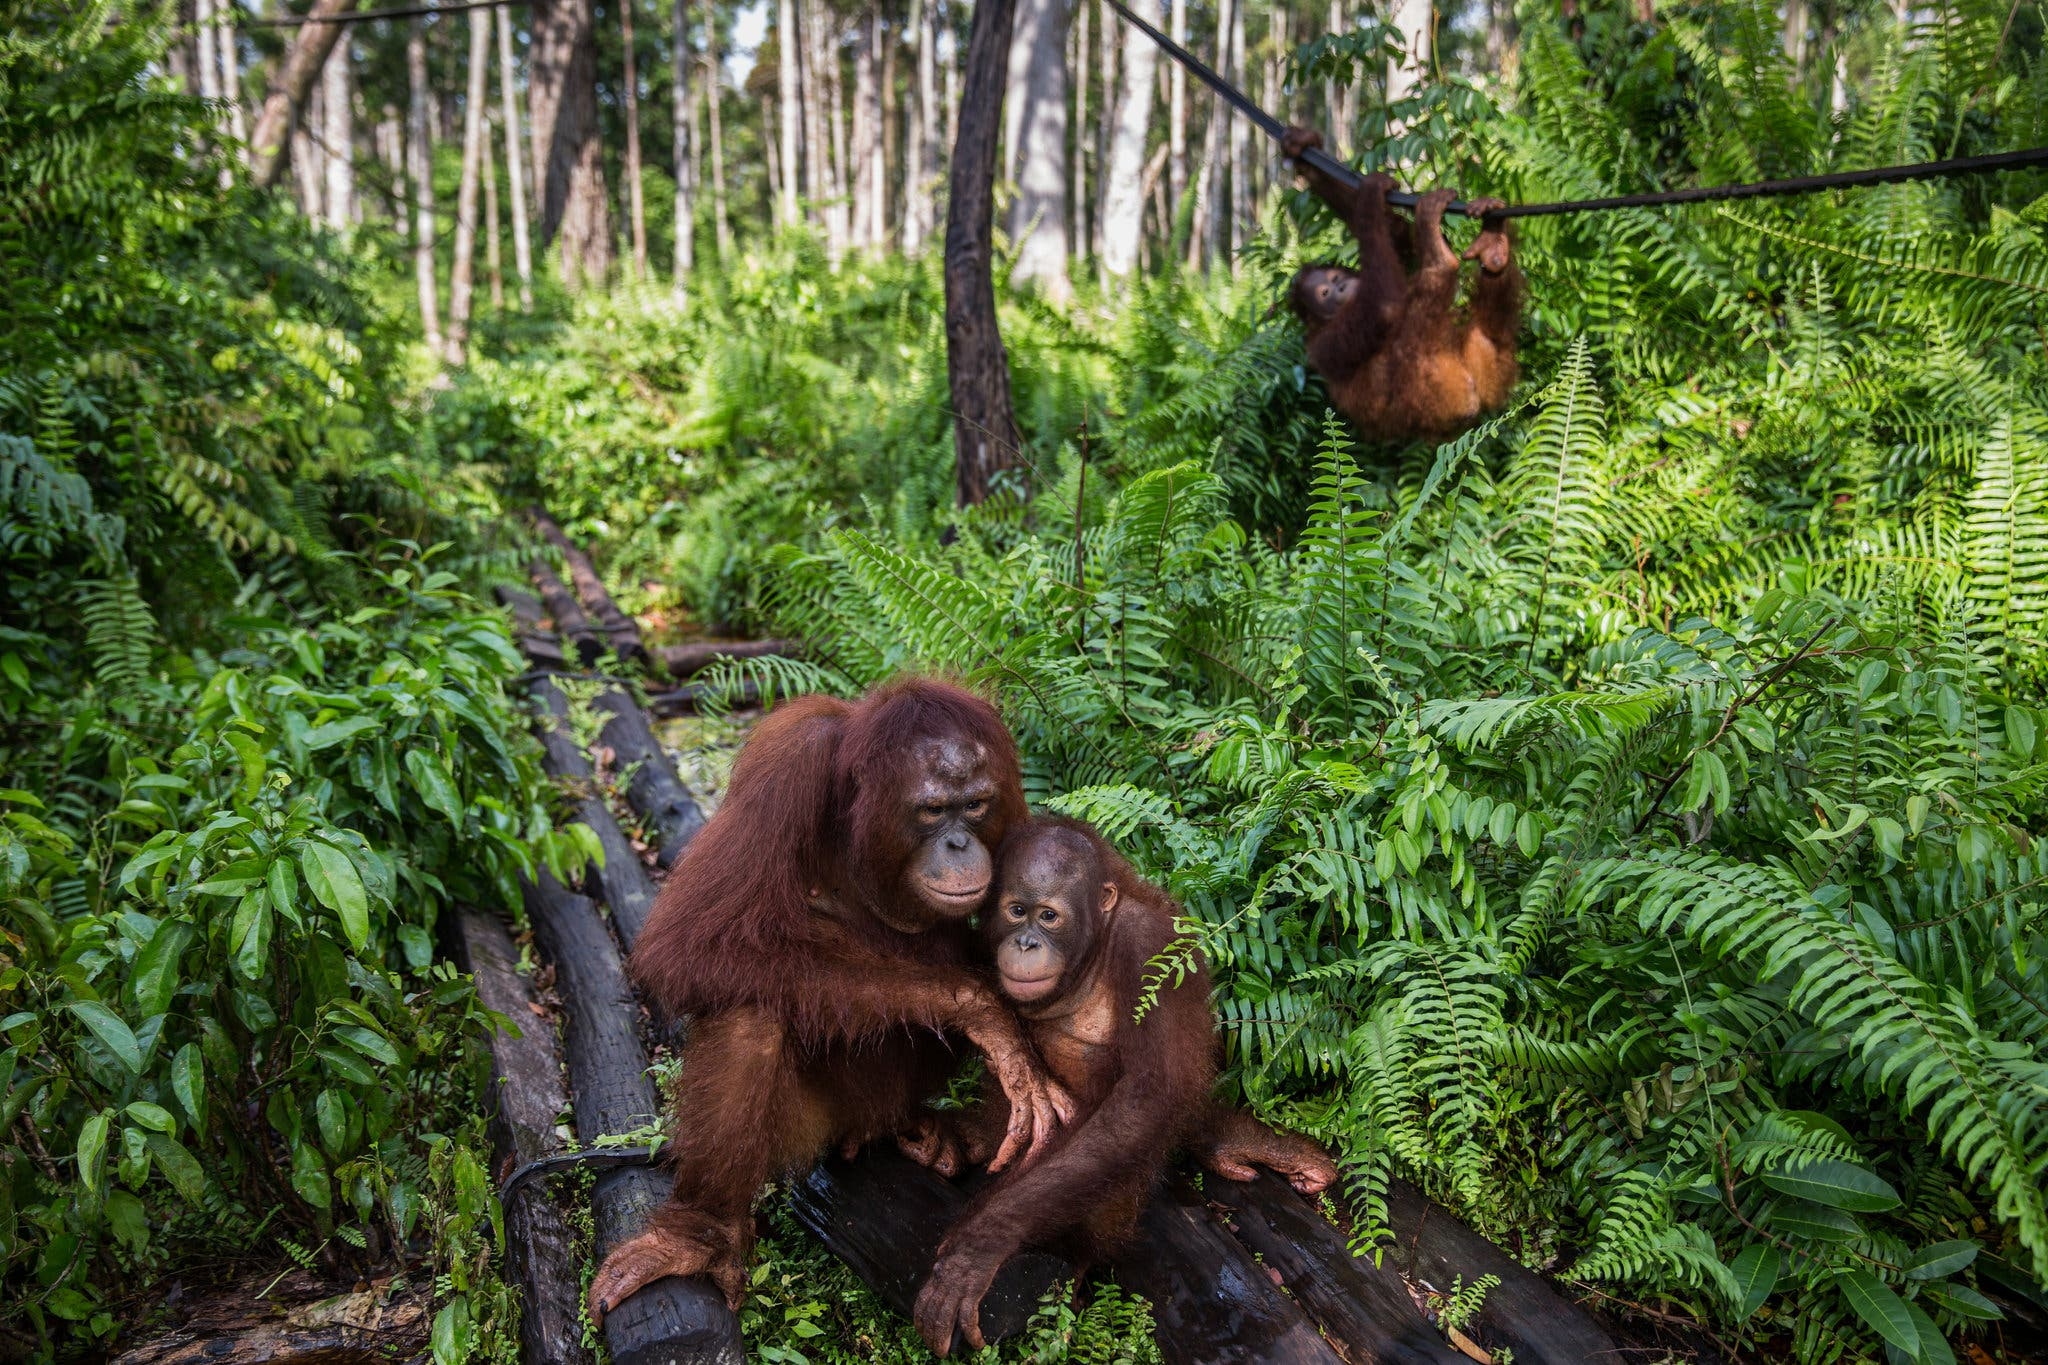 Jungle monkeys. Суматранский орангутанг. Орангутанг в тропическом лесу. Суматранский орангутан самка. Обезьяна орангутанг.